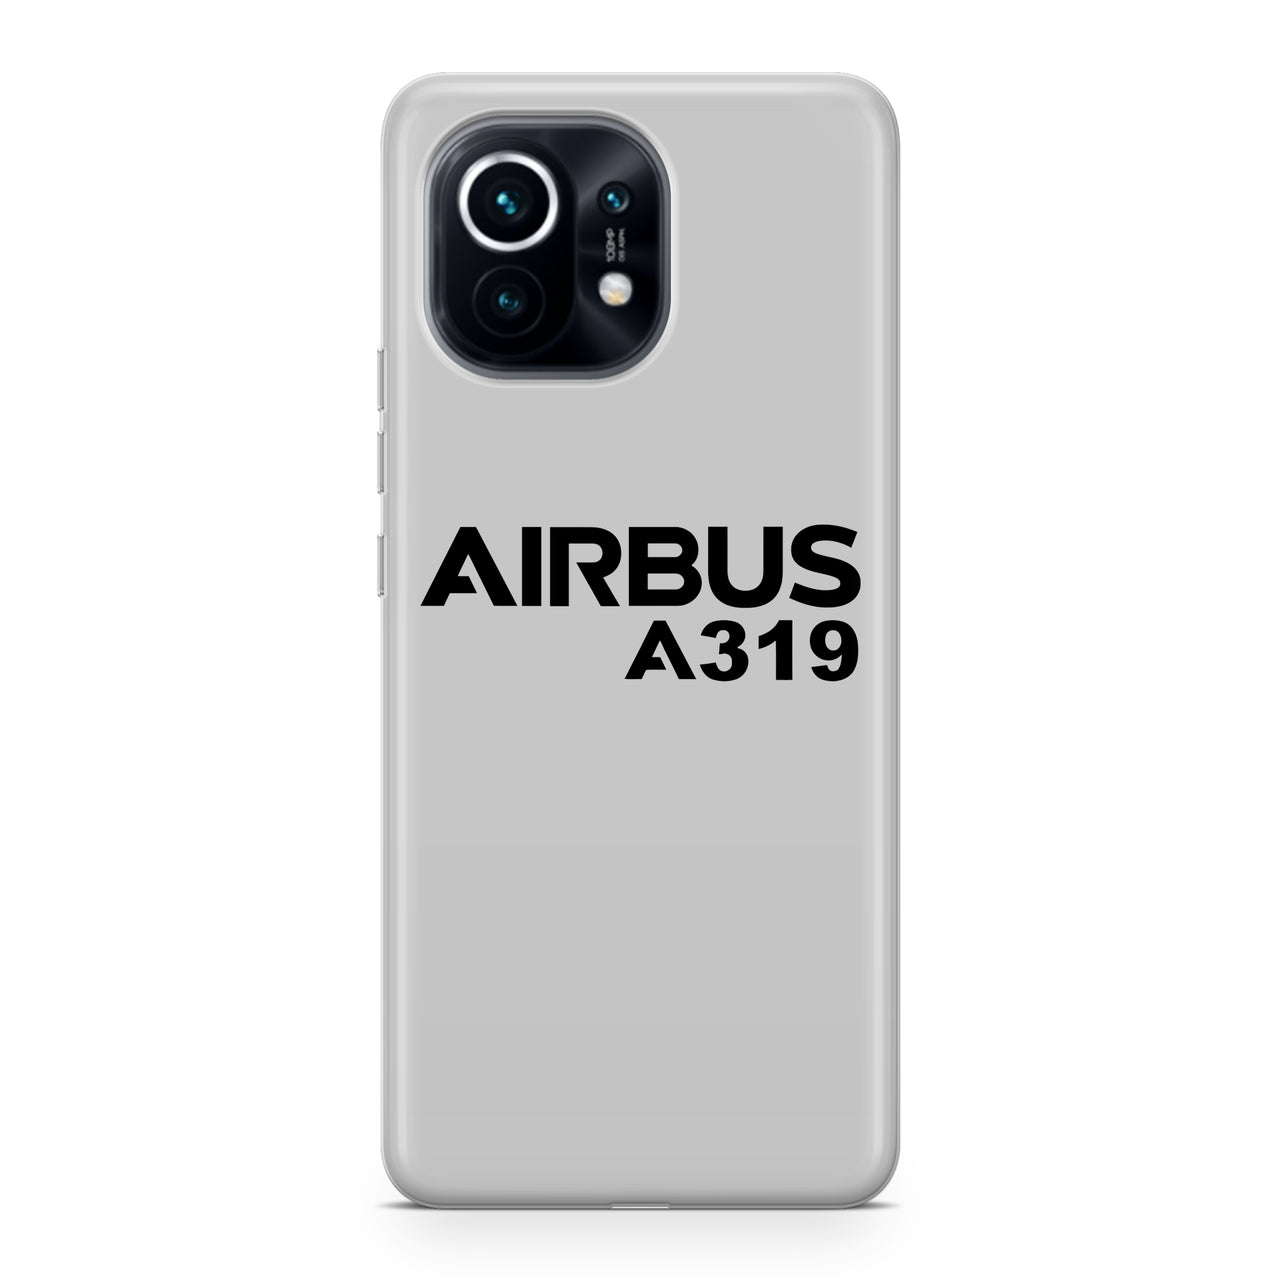 Airbus A319 & Text Designed Xiaomi Cases